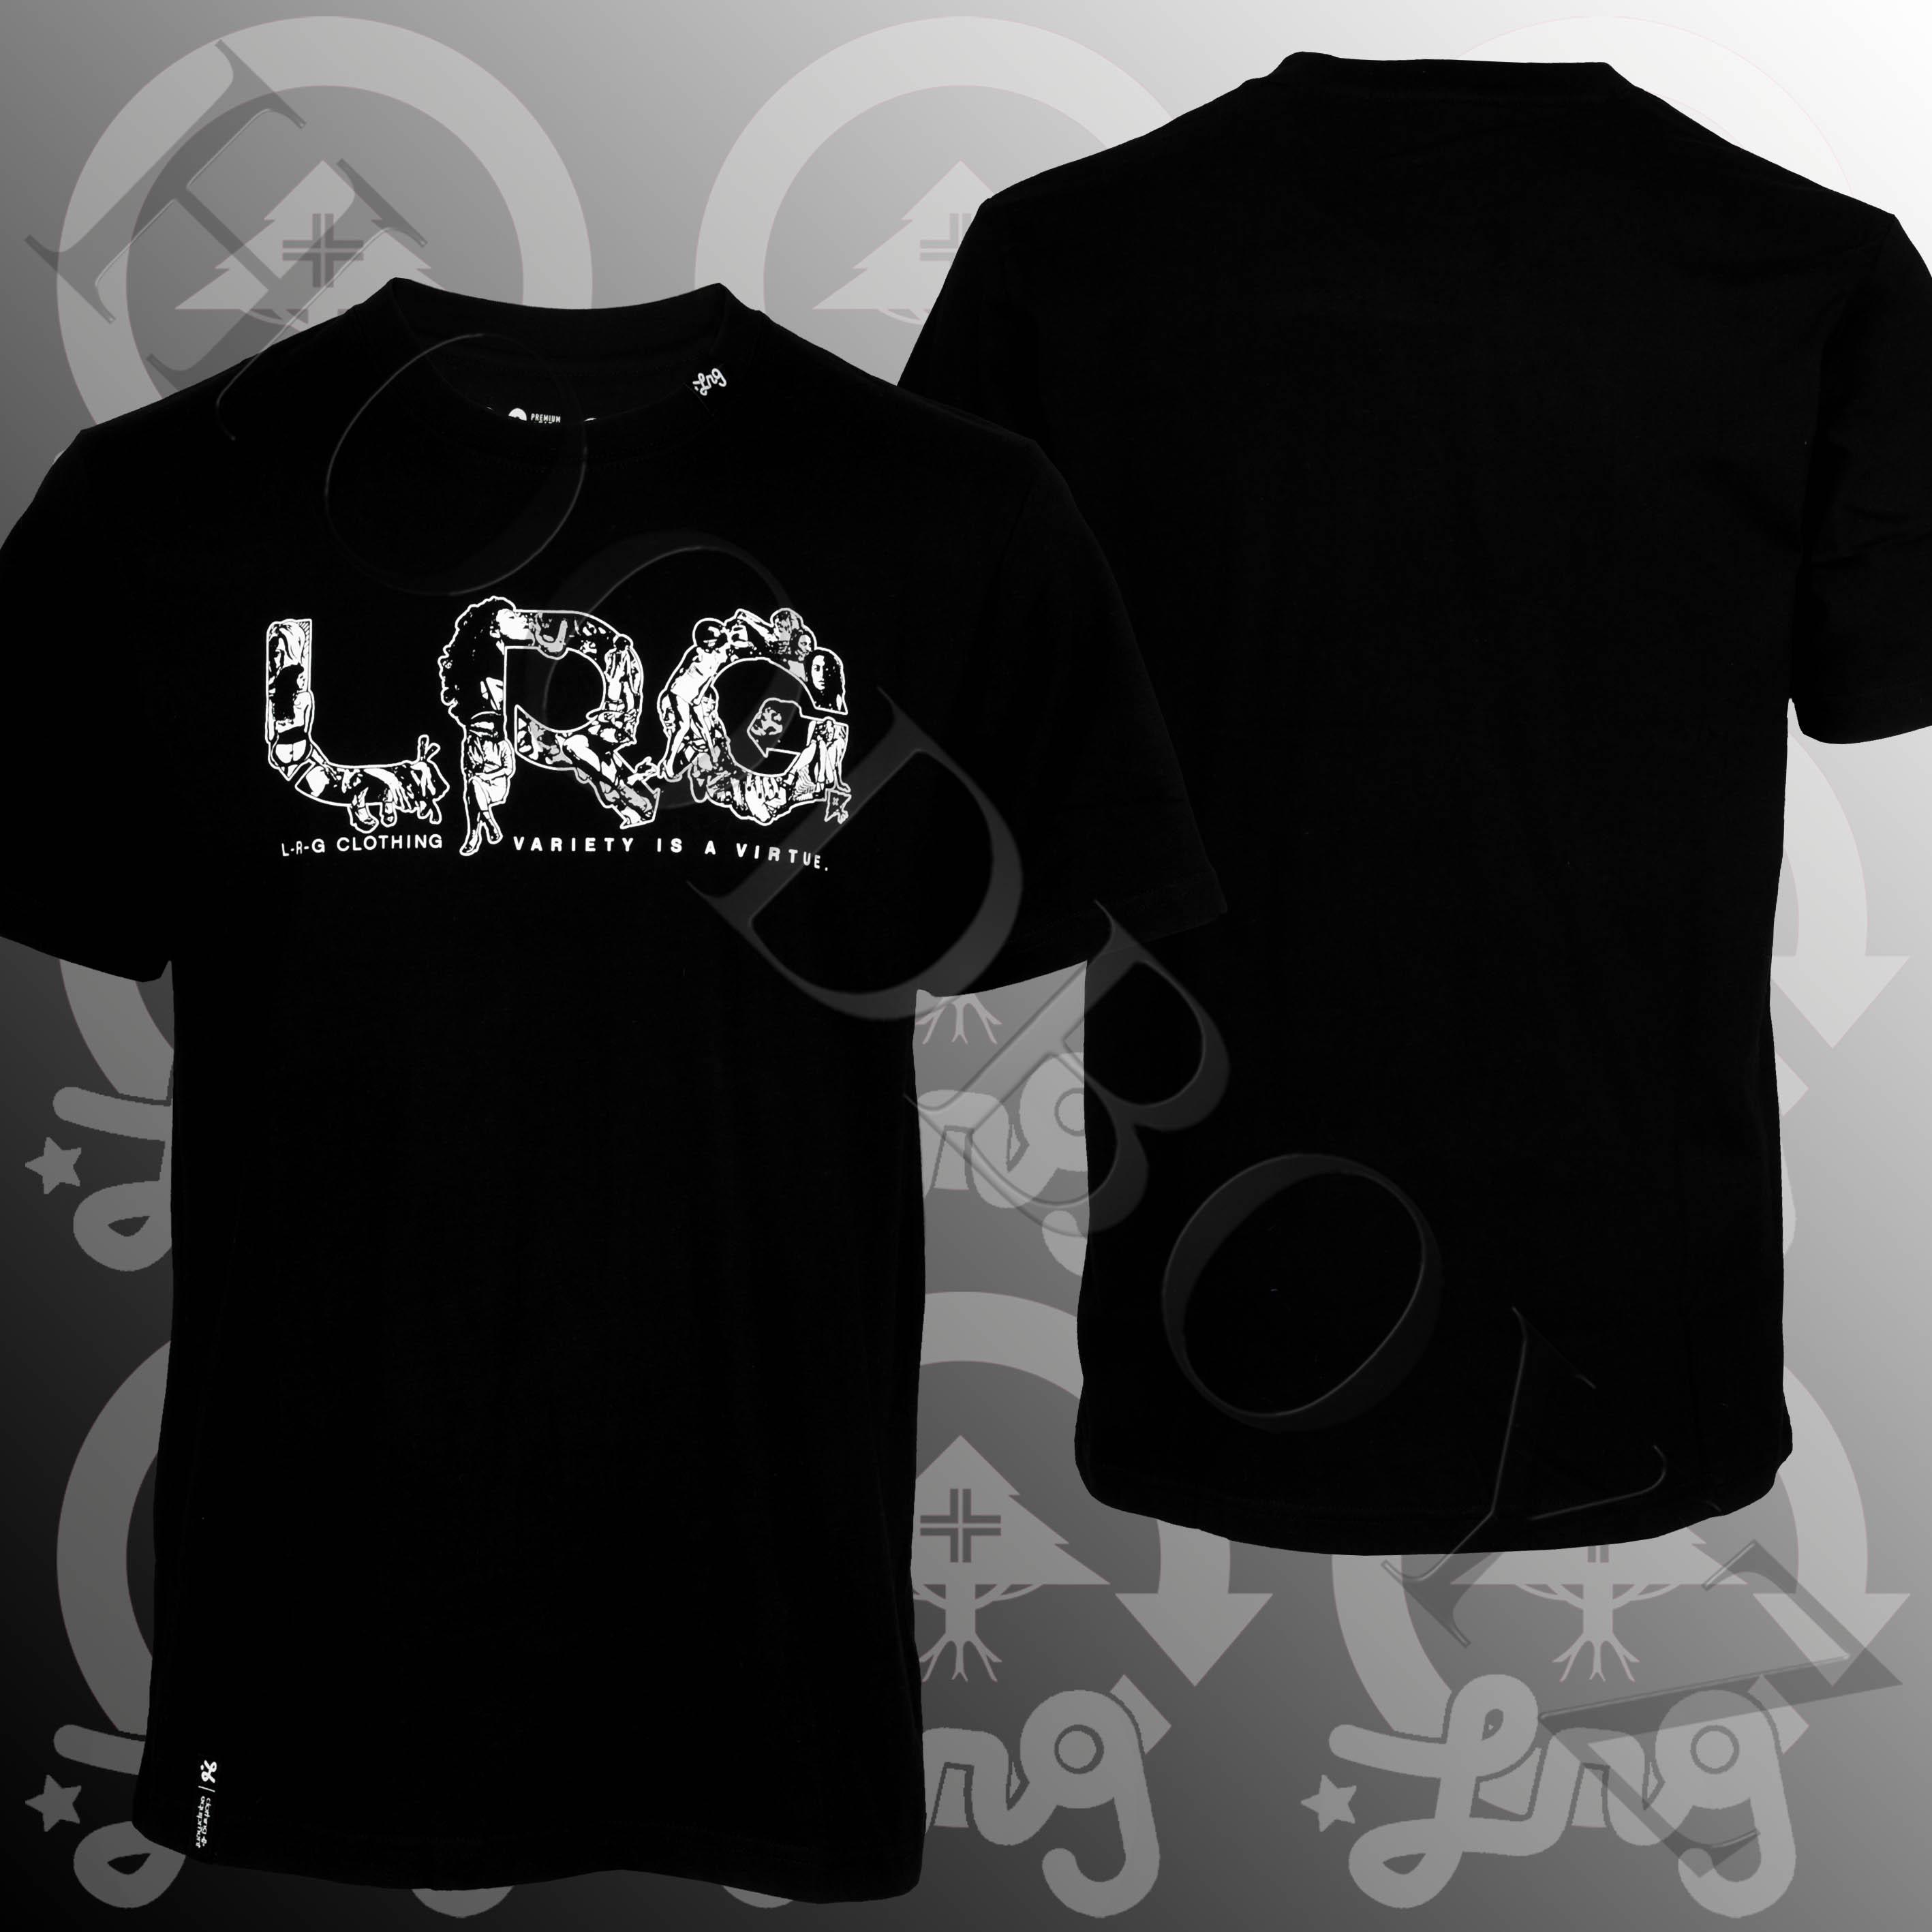 Foto Lrg Variety Camisetas Negro